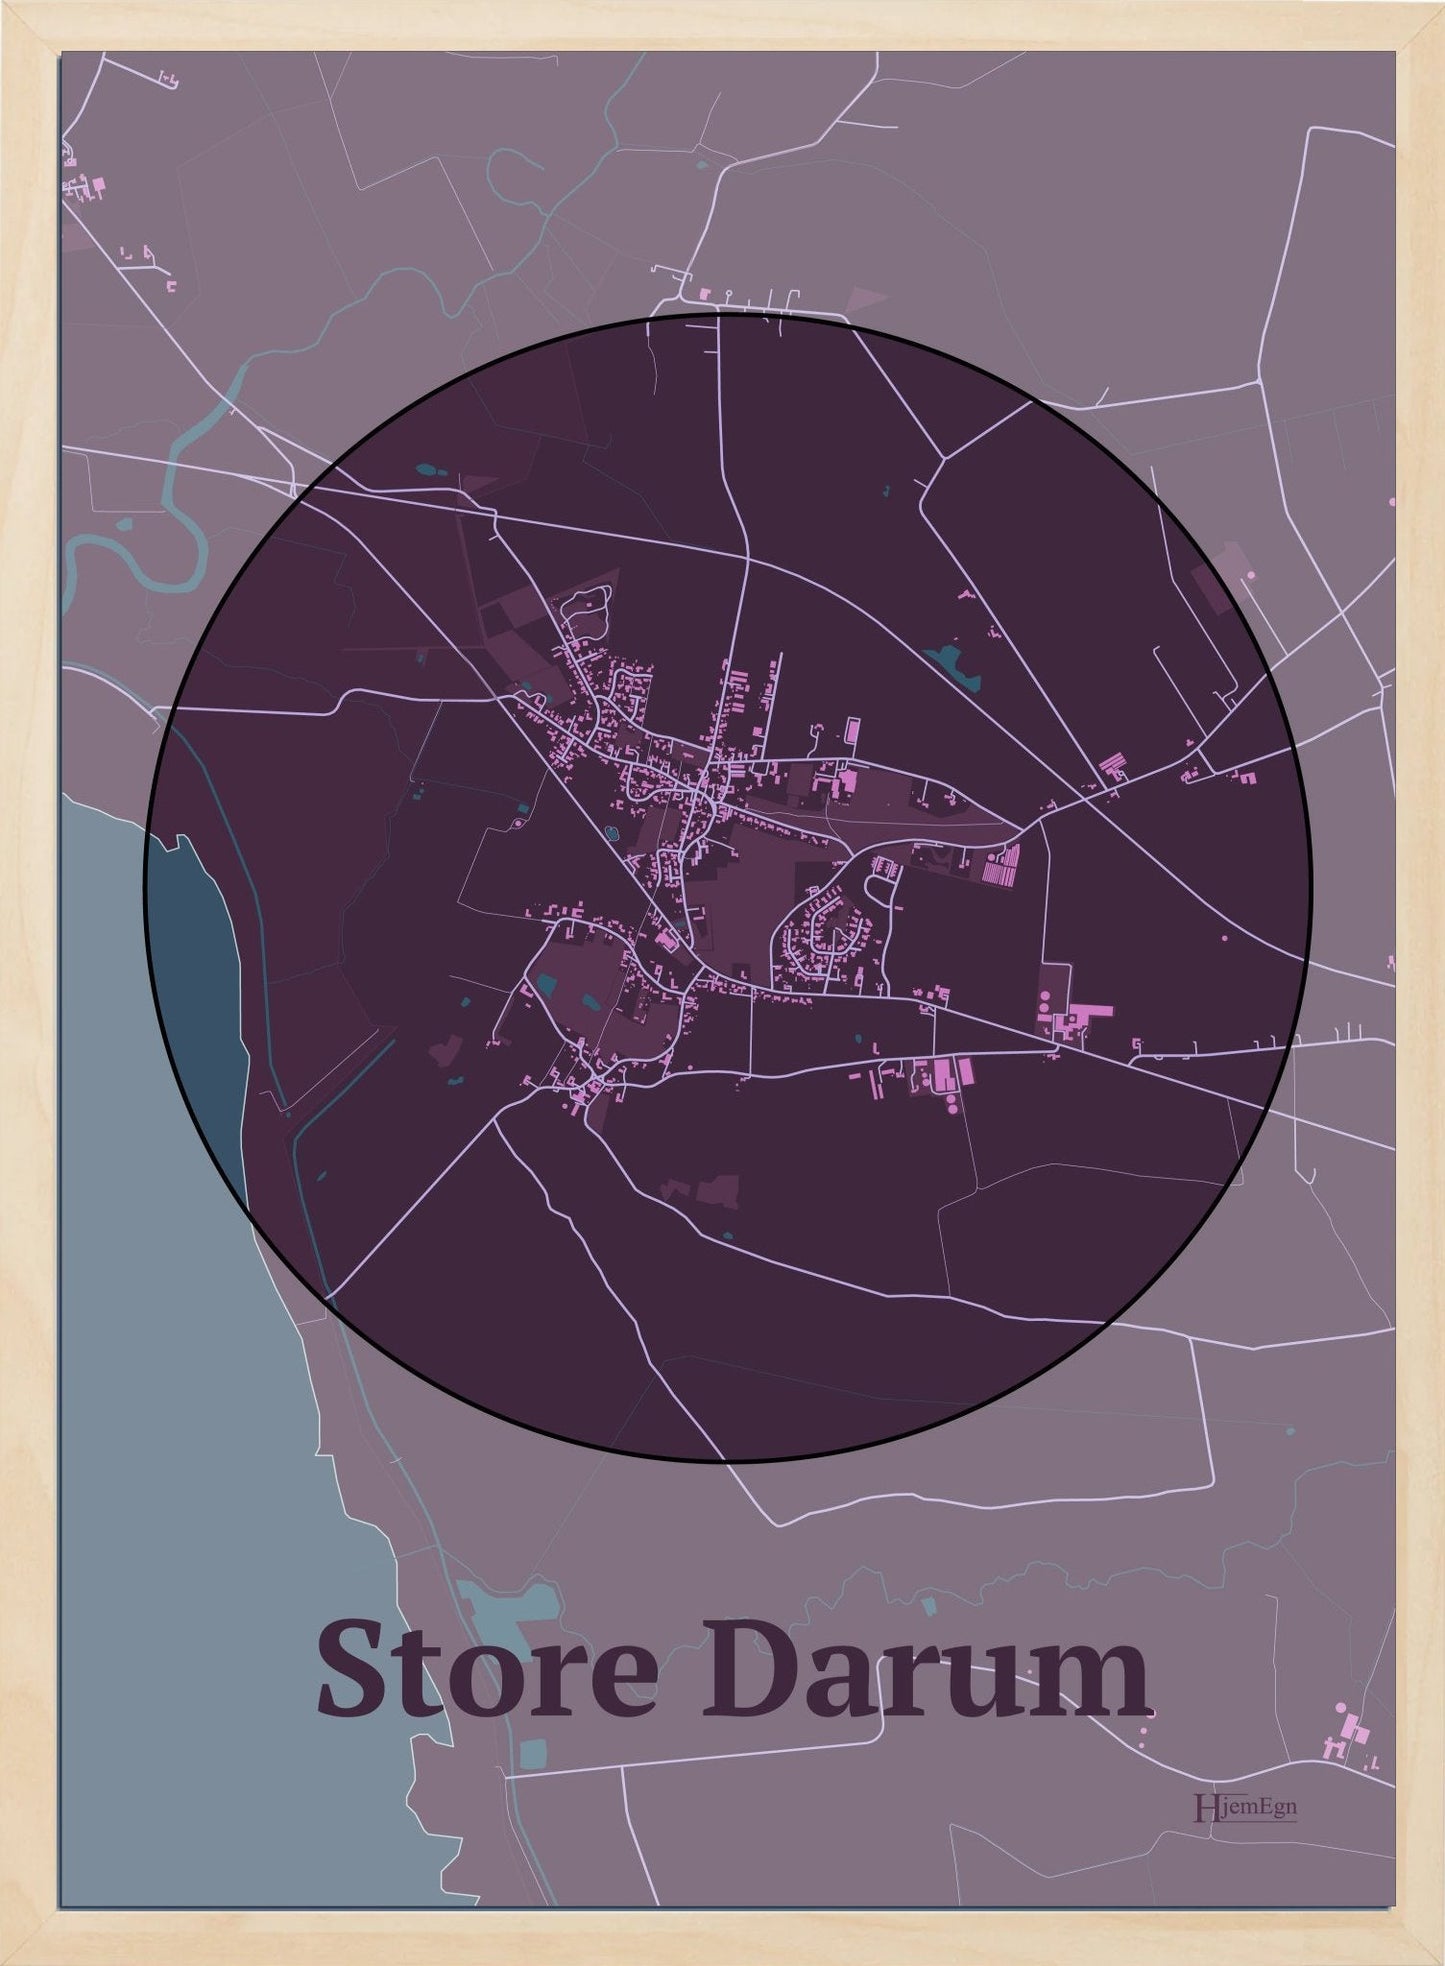 Store Darum plakat i farve mørk rød og HjemEgn.dk design centrum. Design bykort for Store Darum